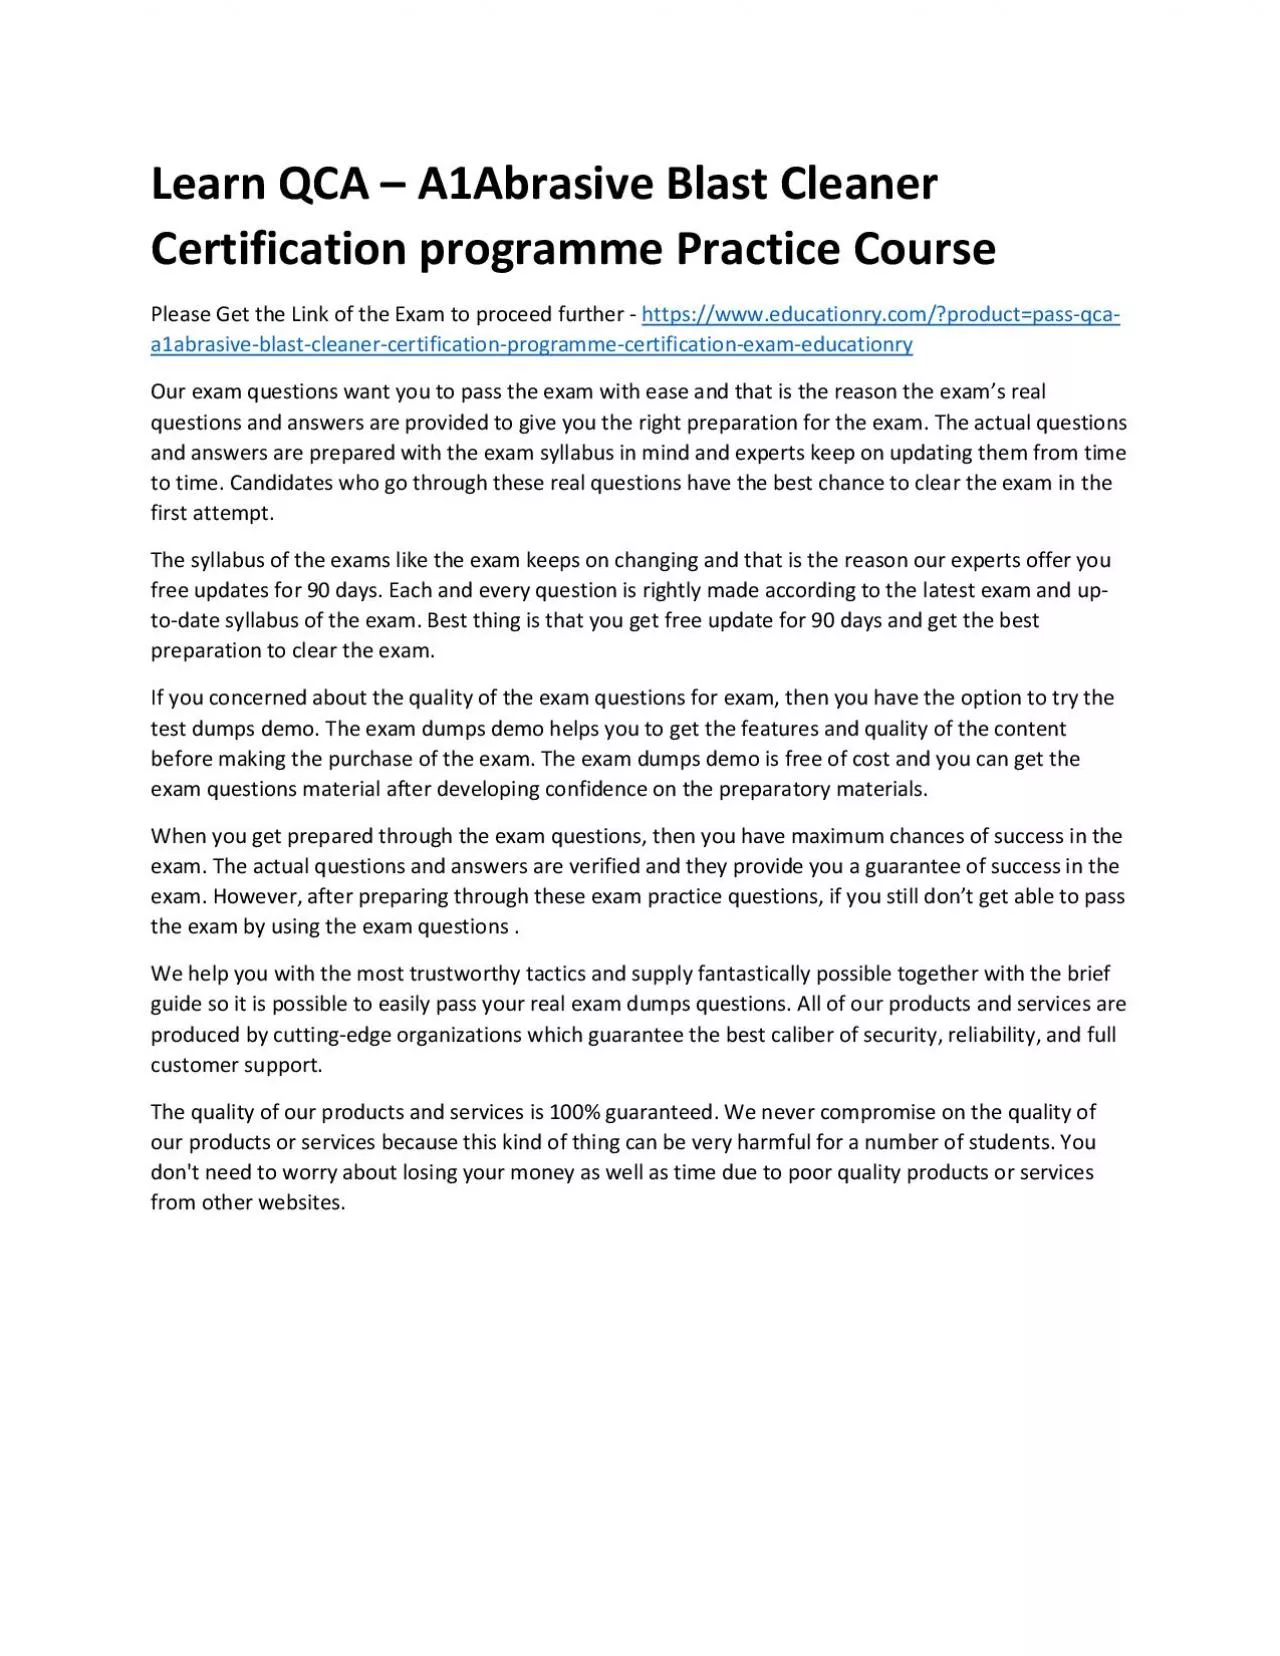 QCA – A1Abrasive Blast Cleaner Certification programme